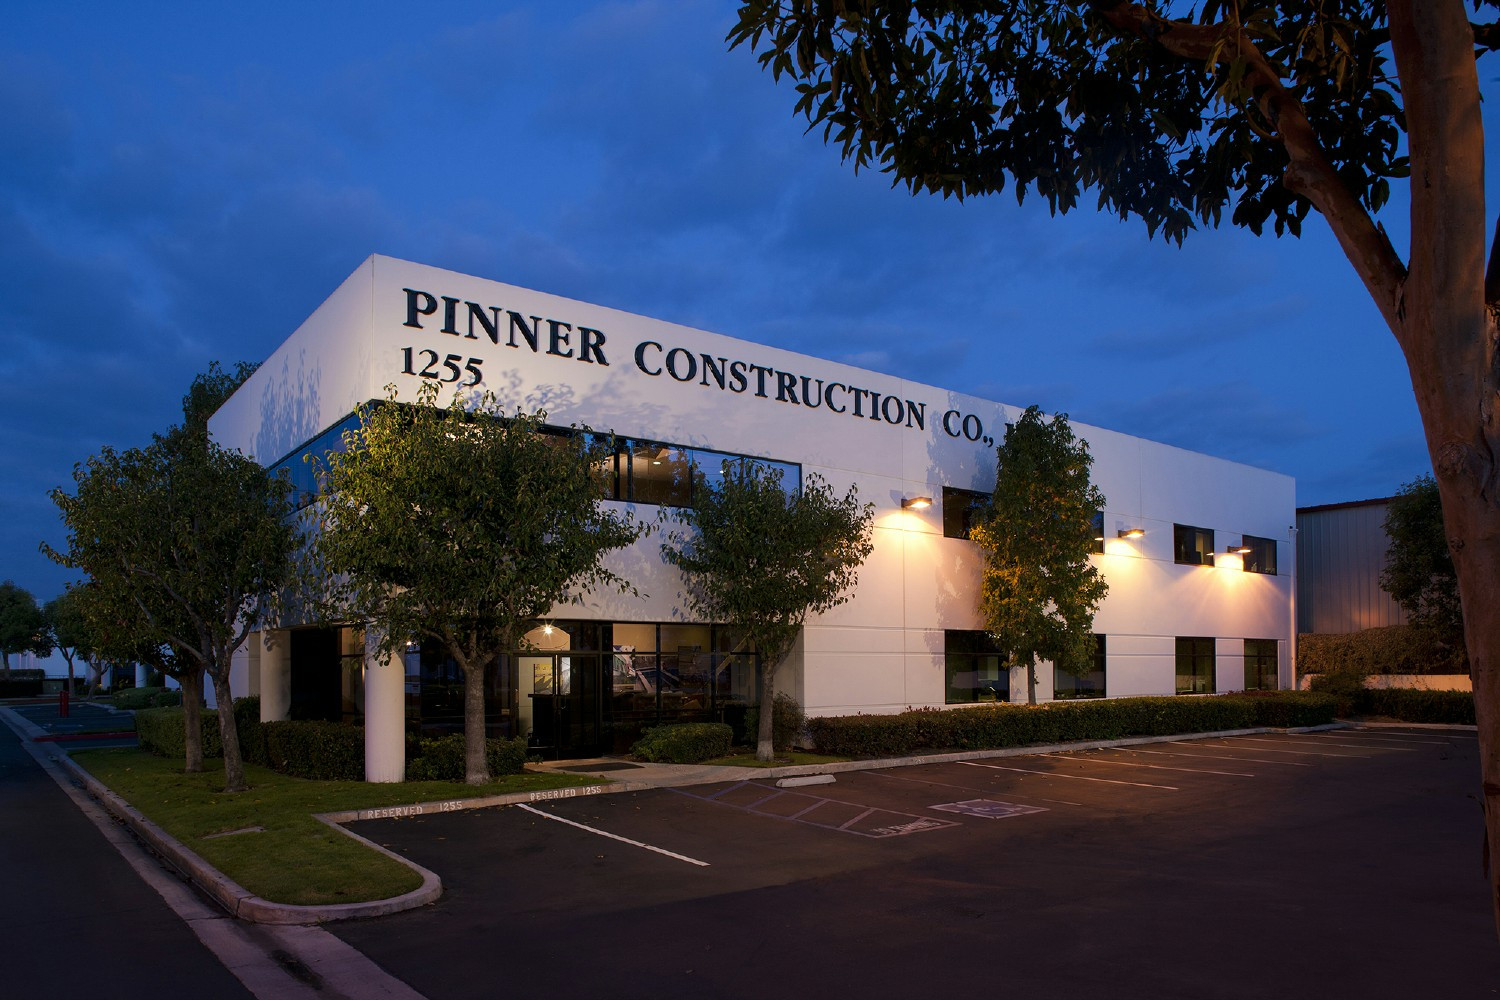 Pinner Construction headquarters in Anaheim, CA